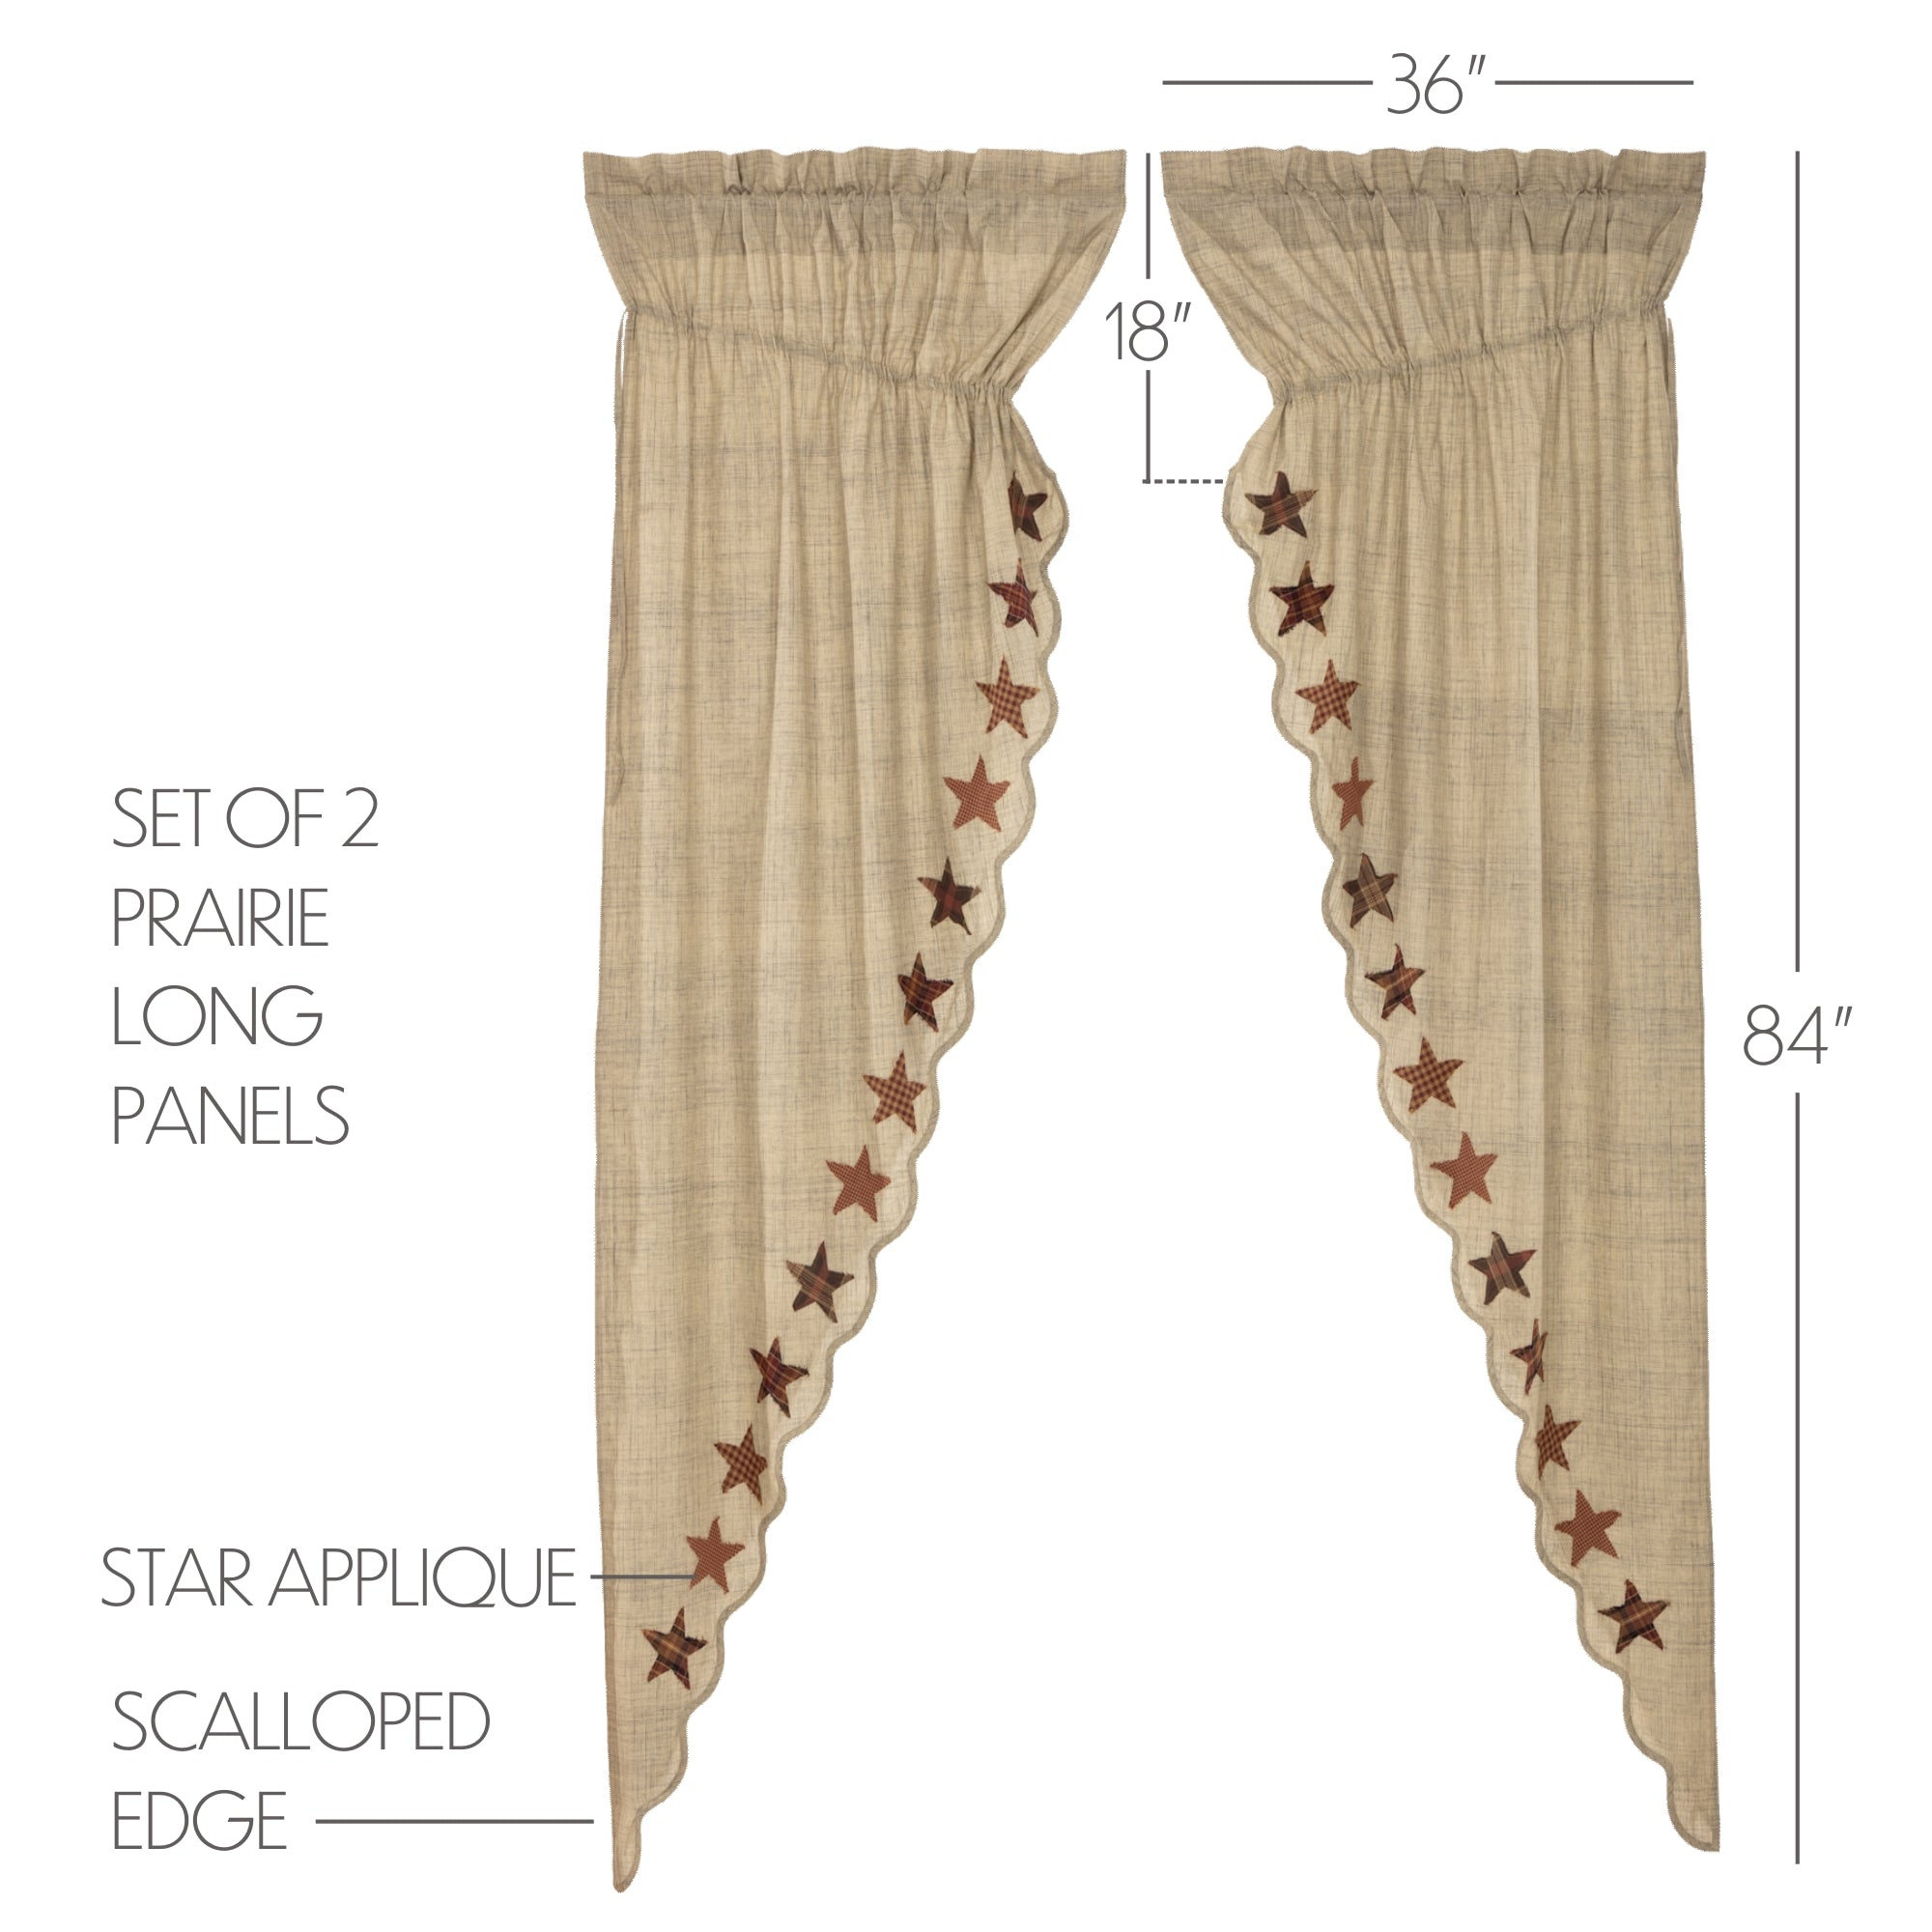 Abilene Star Prairie Long Panel Set of 2 84x36x18 SpadezStore